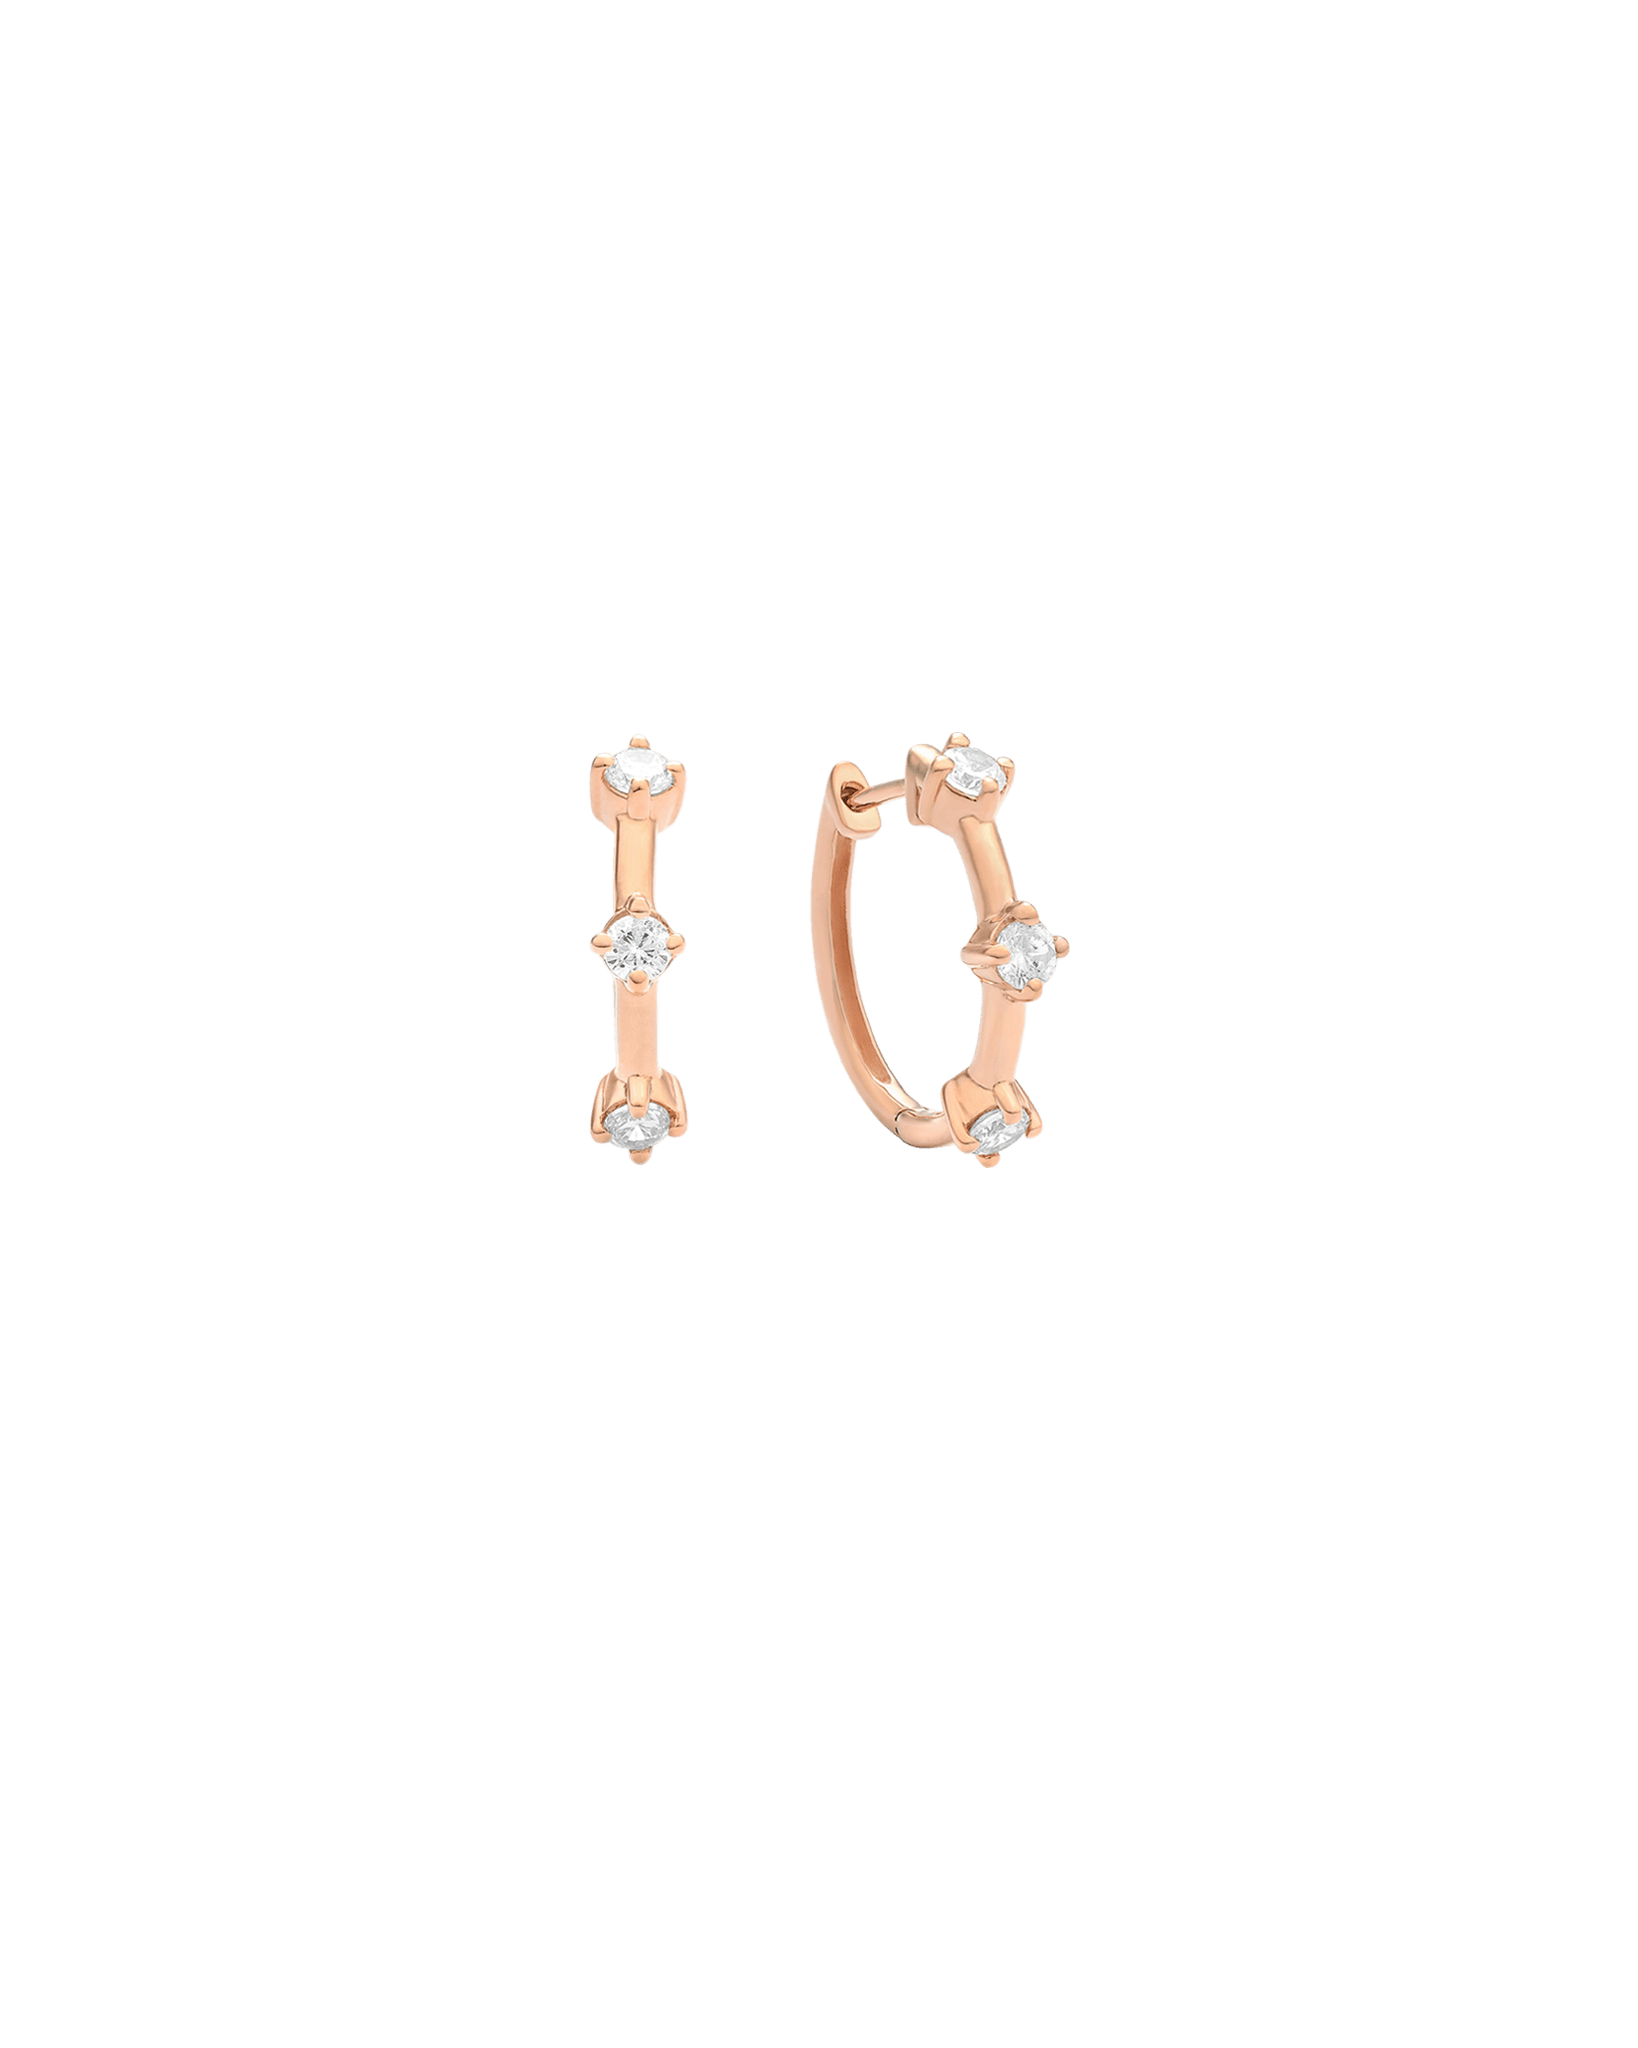 Triple Diamond Hoops - 14K Rose Gold Earrings magal-dev 